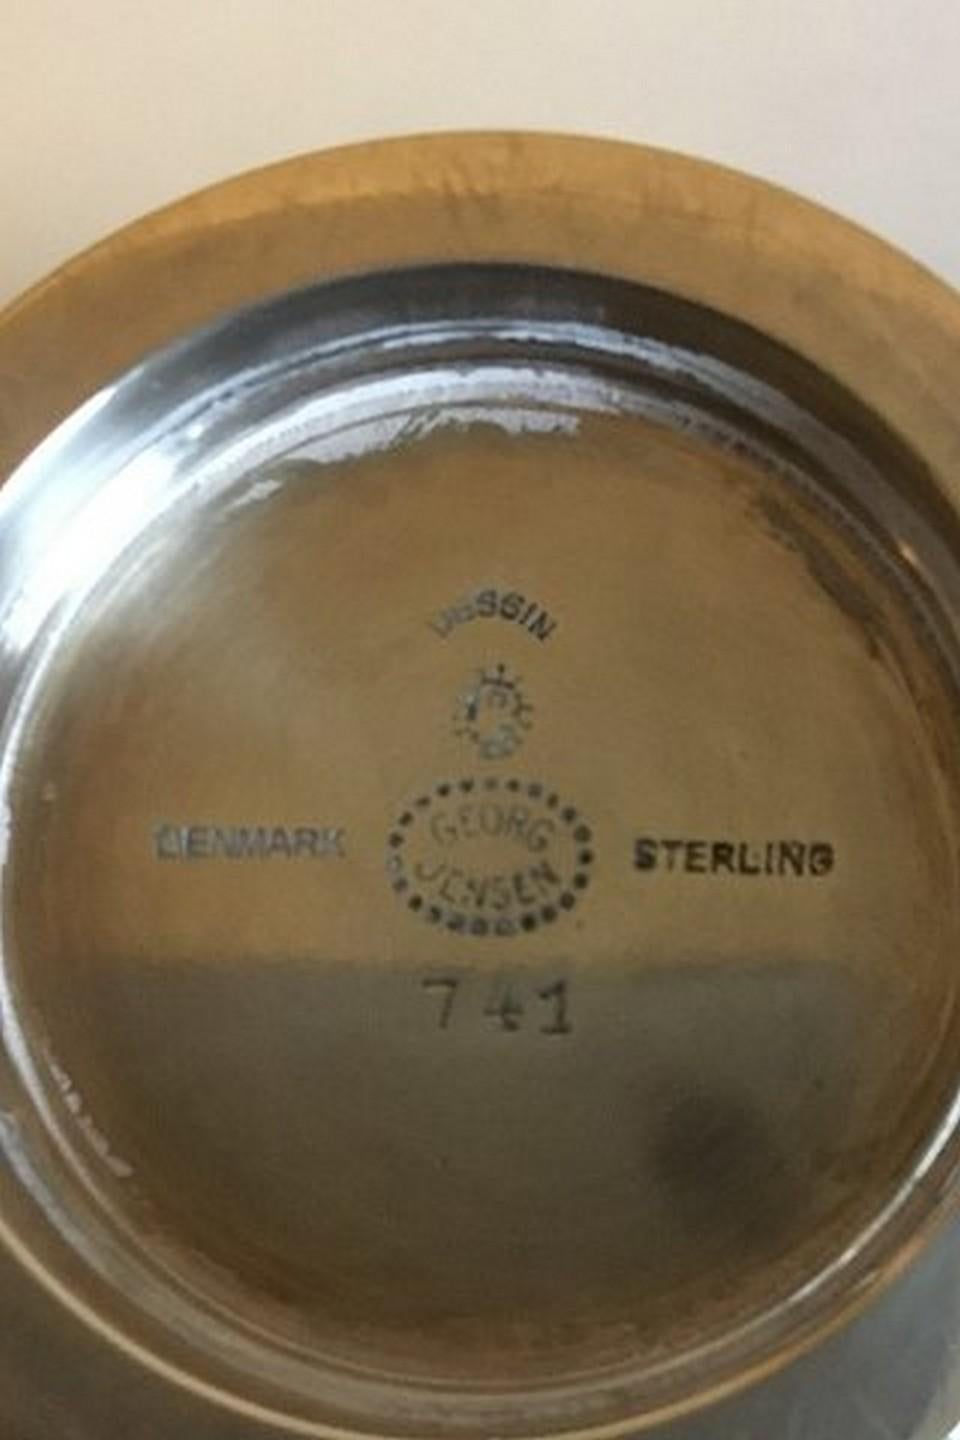 Georg Jensen sterling silver acorn sugar caster no 741. Measures 16 cm / 6 19/64 in. Weighs 172 g / 6.05 oz.
Item no.: 348132.